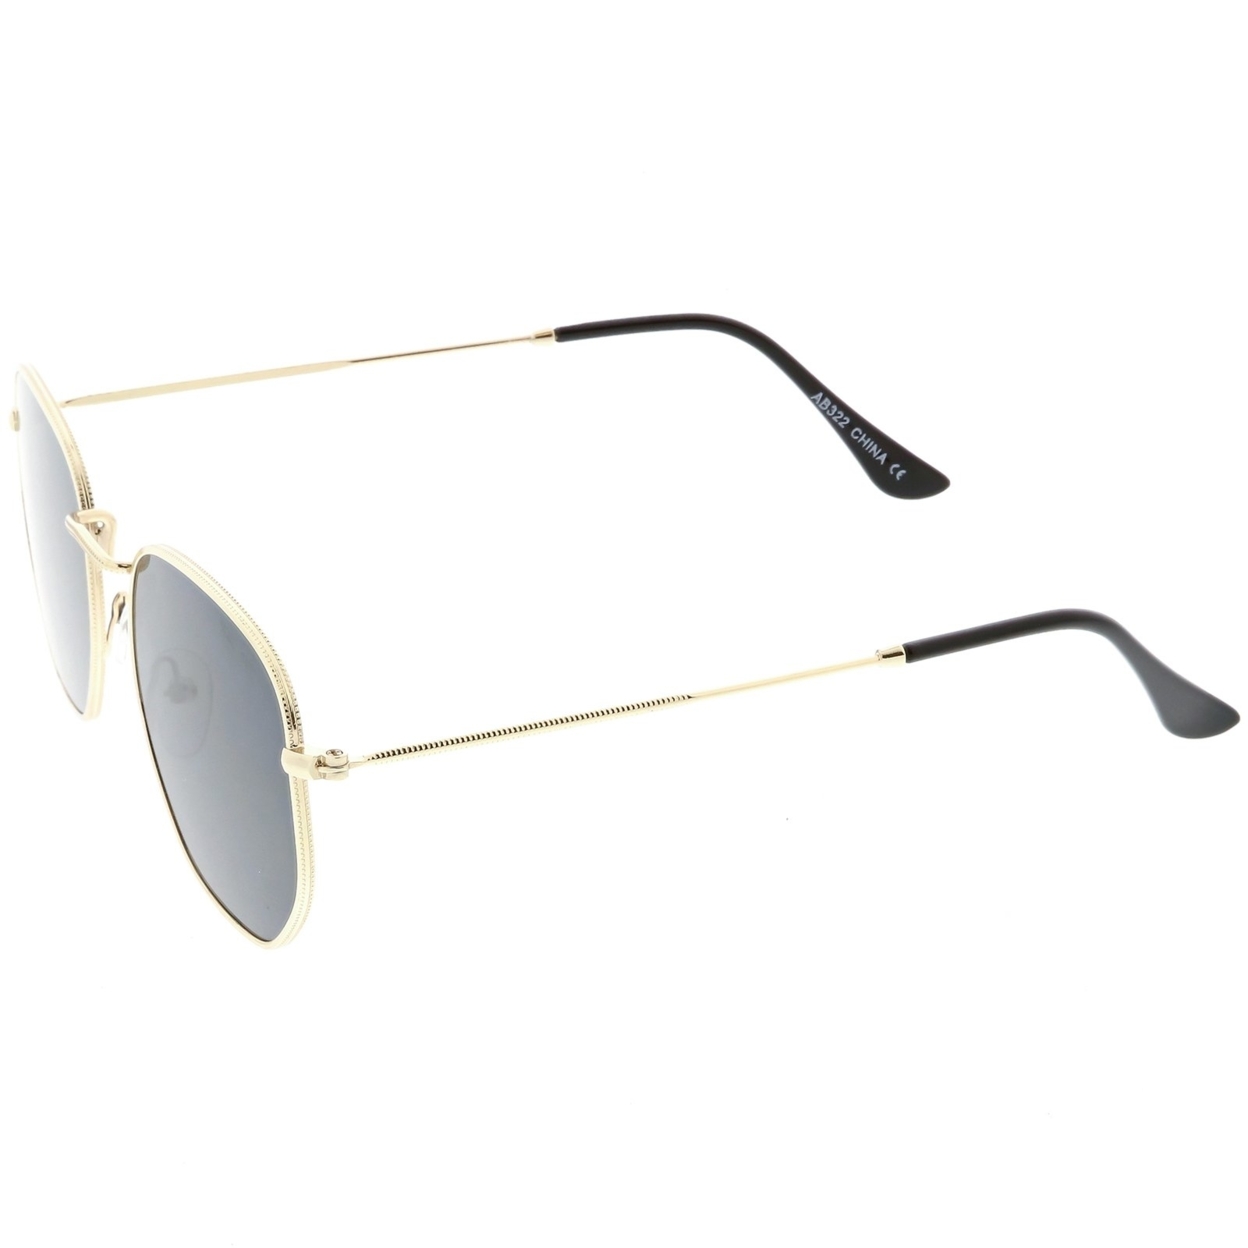 Modern Metal Geometric Sunglasses Slim Arms Neutral Flat Lens 51mm - Gold / Smoke